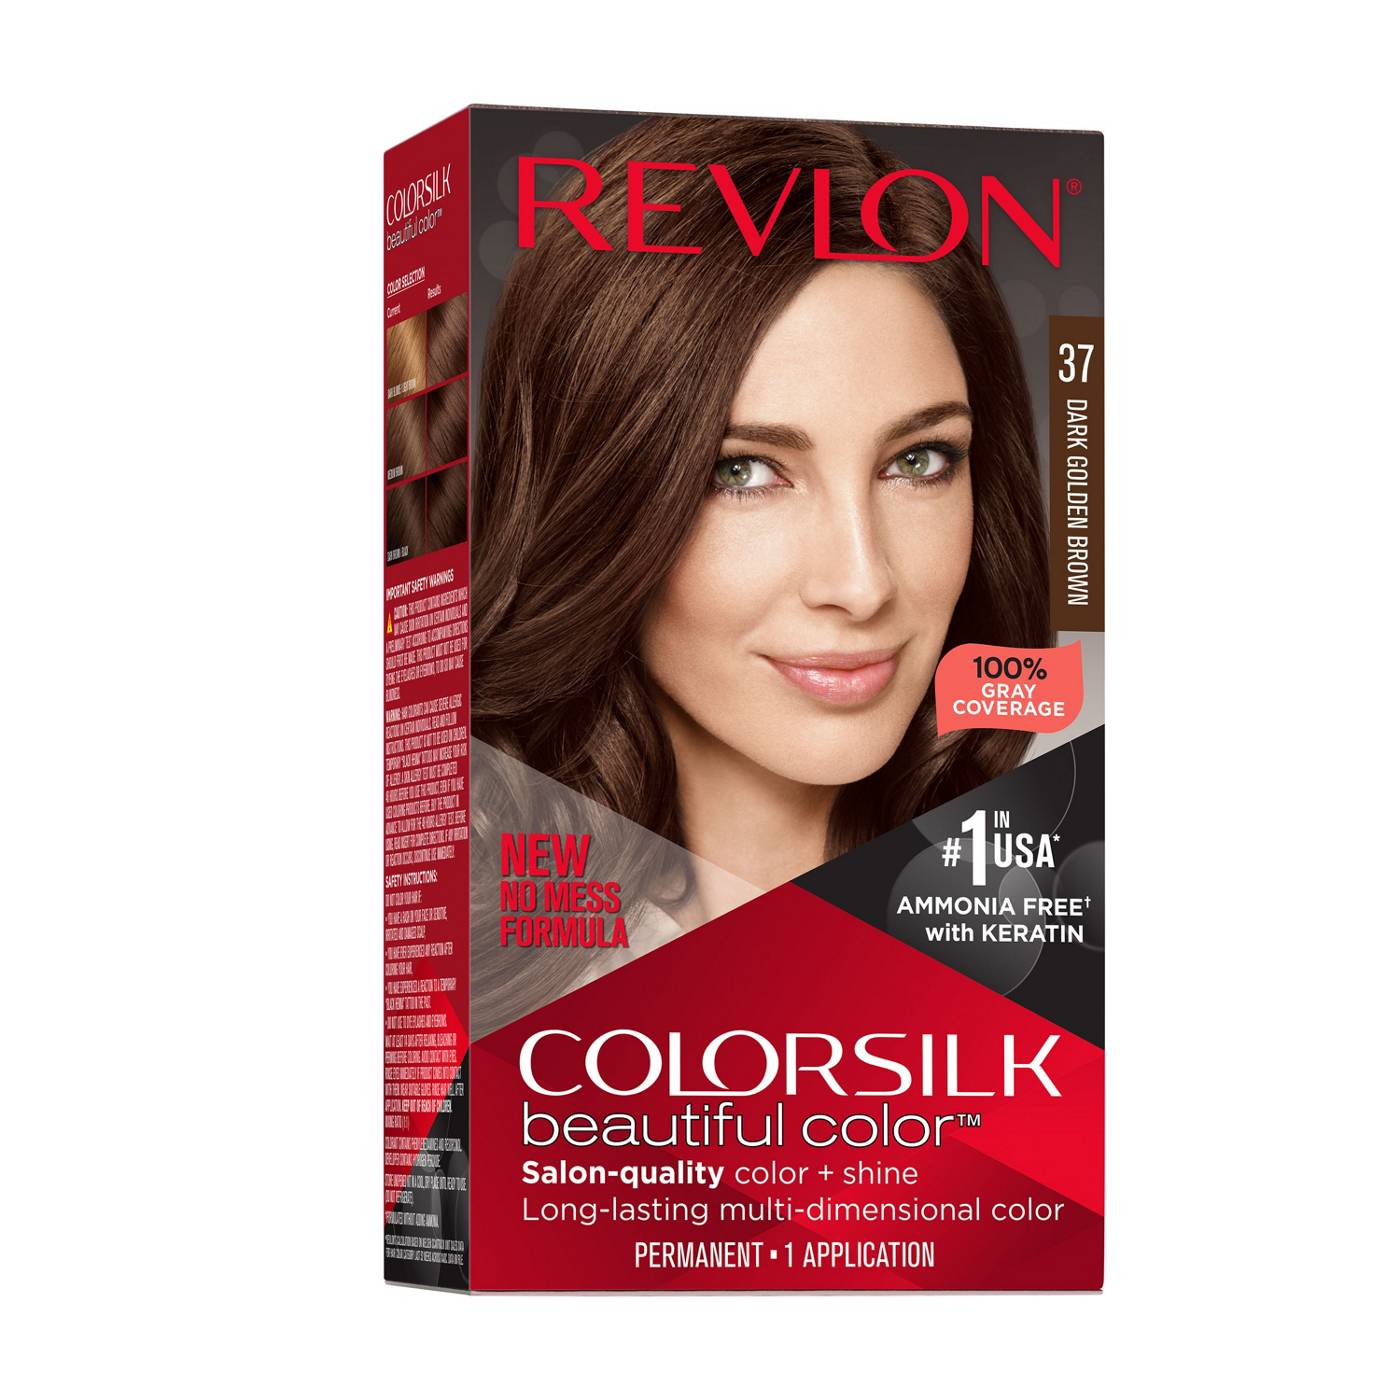 Revlon ColorSilk Hair Color - 37 Dark Golden Brown; image 1 of 7